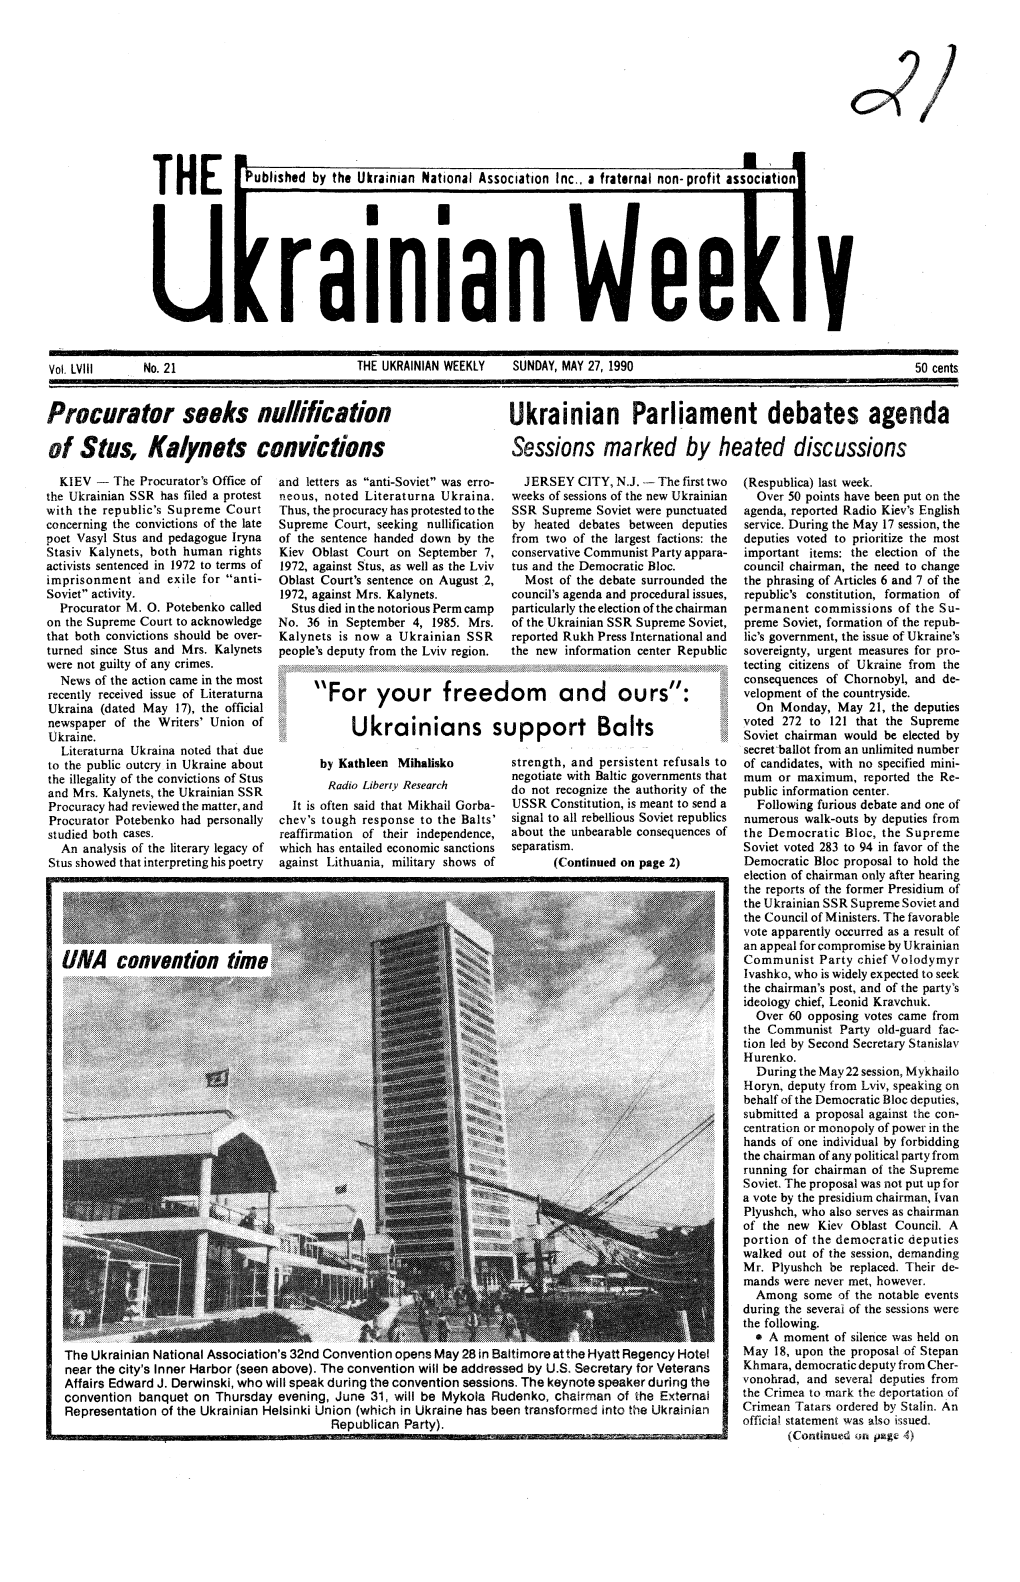 The Ukrainian Weekly 1990, No.21